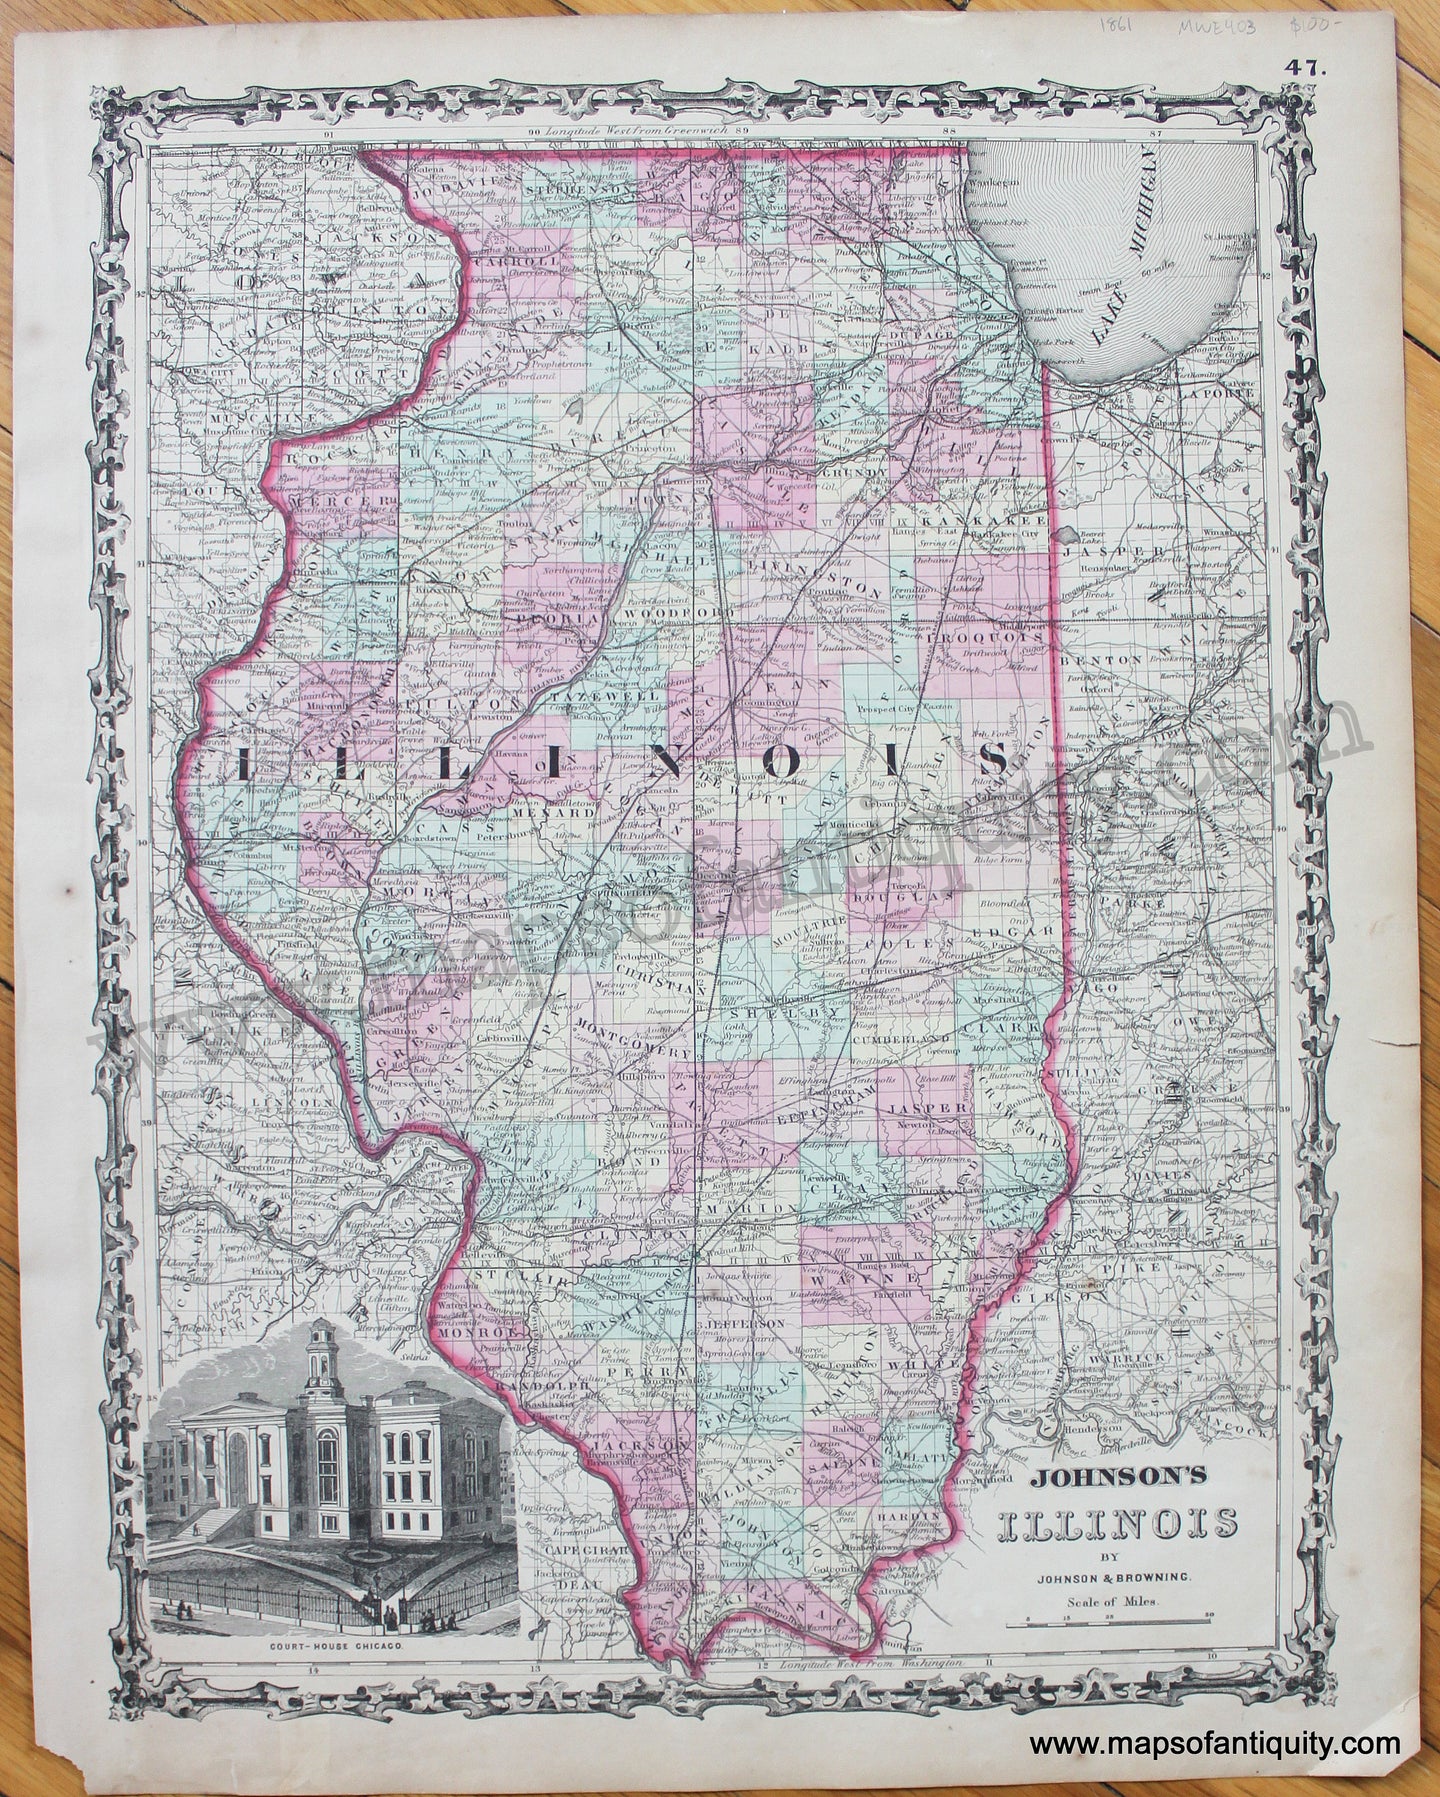 Maps-Antiquity-Antique-Map-United-States-Johnson-Ward-1861-1860s-1800s-19th-Century-Johnson's-Illinois-Court-House-Chicago-Courthouse